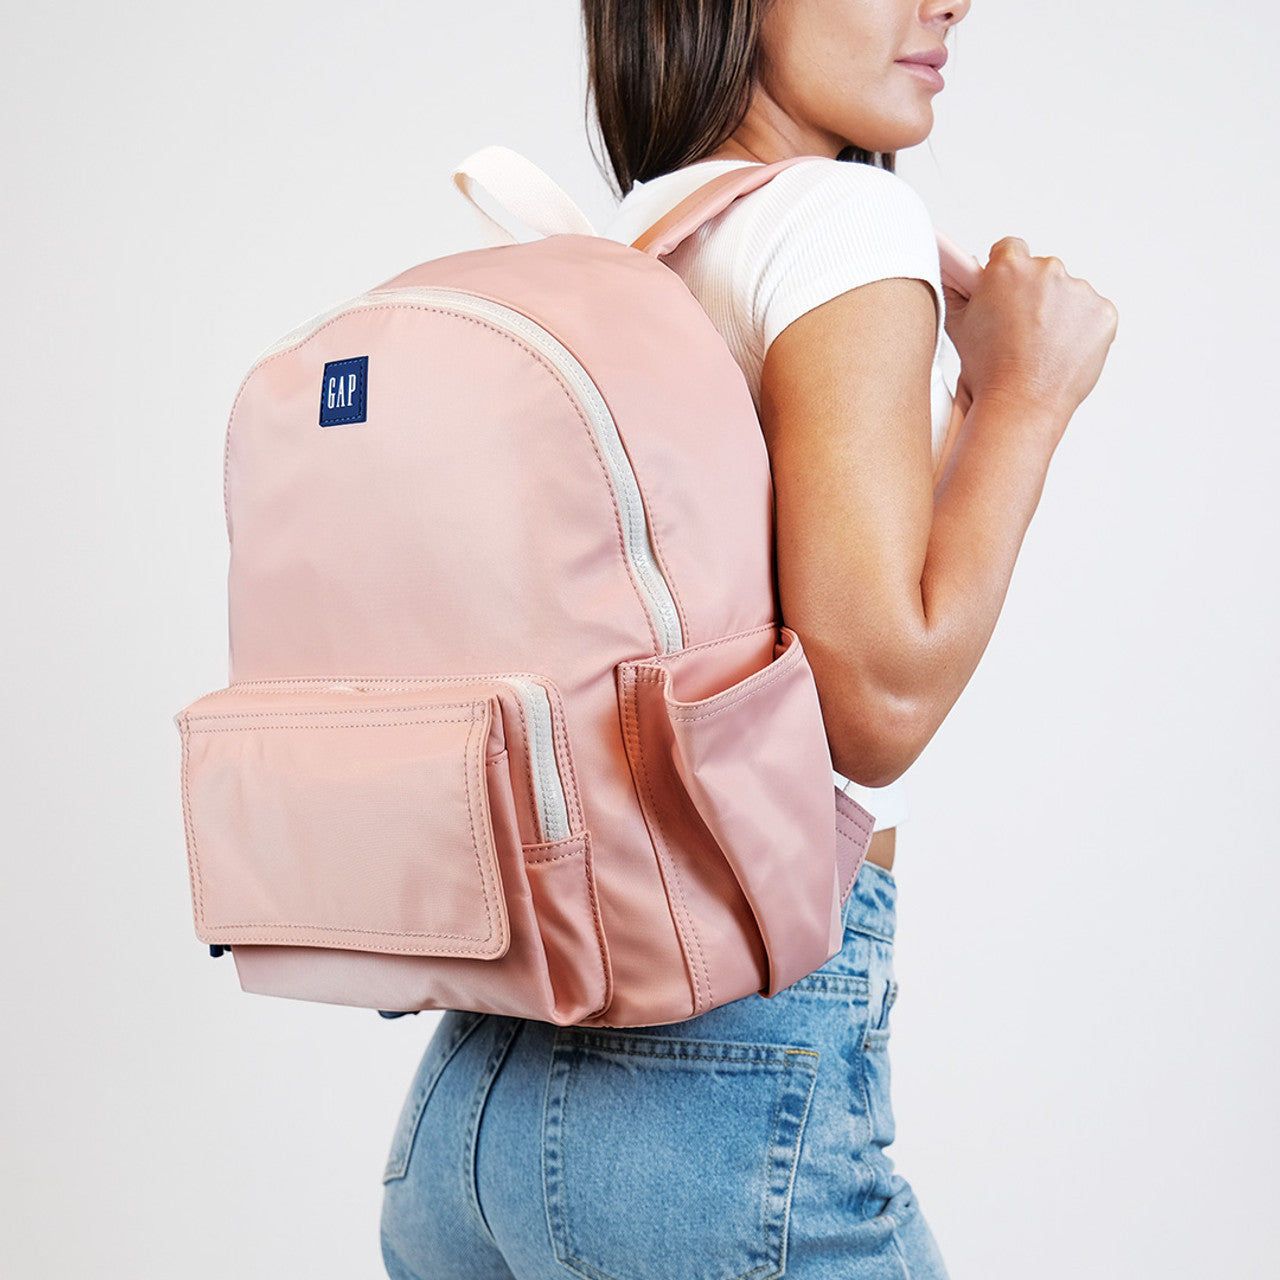 GAP - 11 Nylon Backpack front pocket - Blush - 0